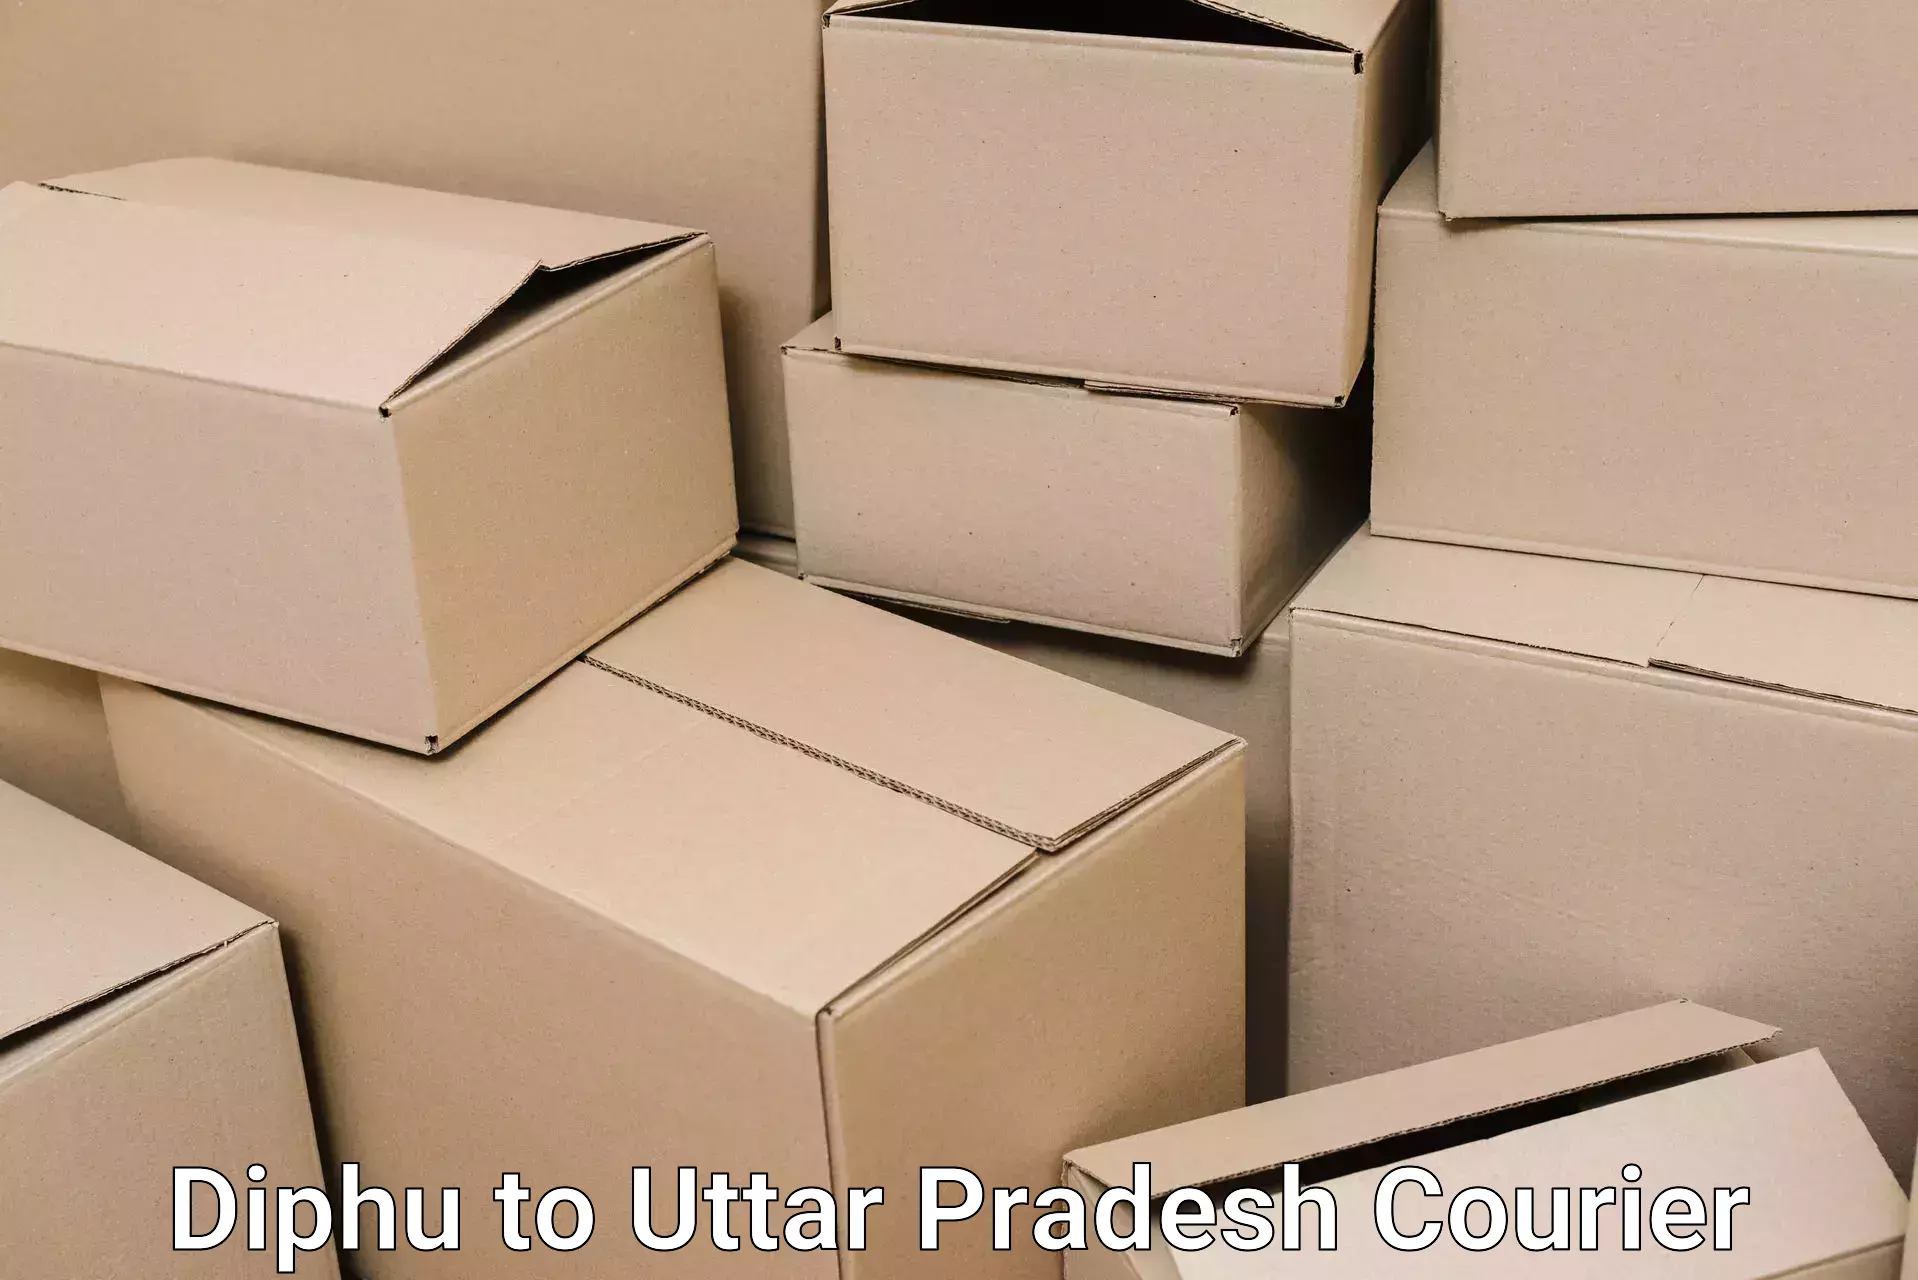 Quality moving company Diphu to Kheragarh